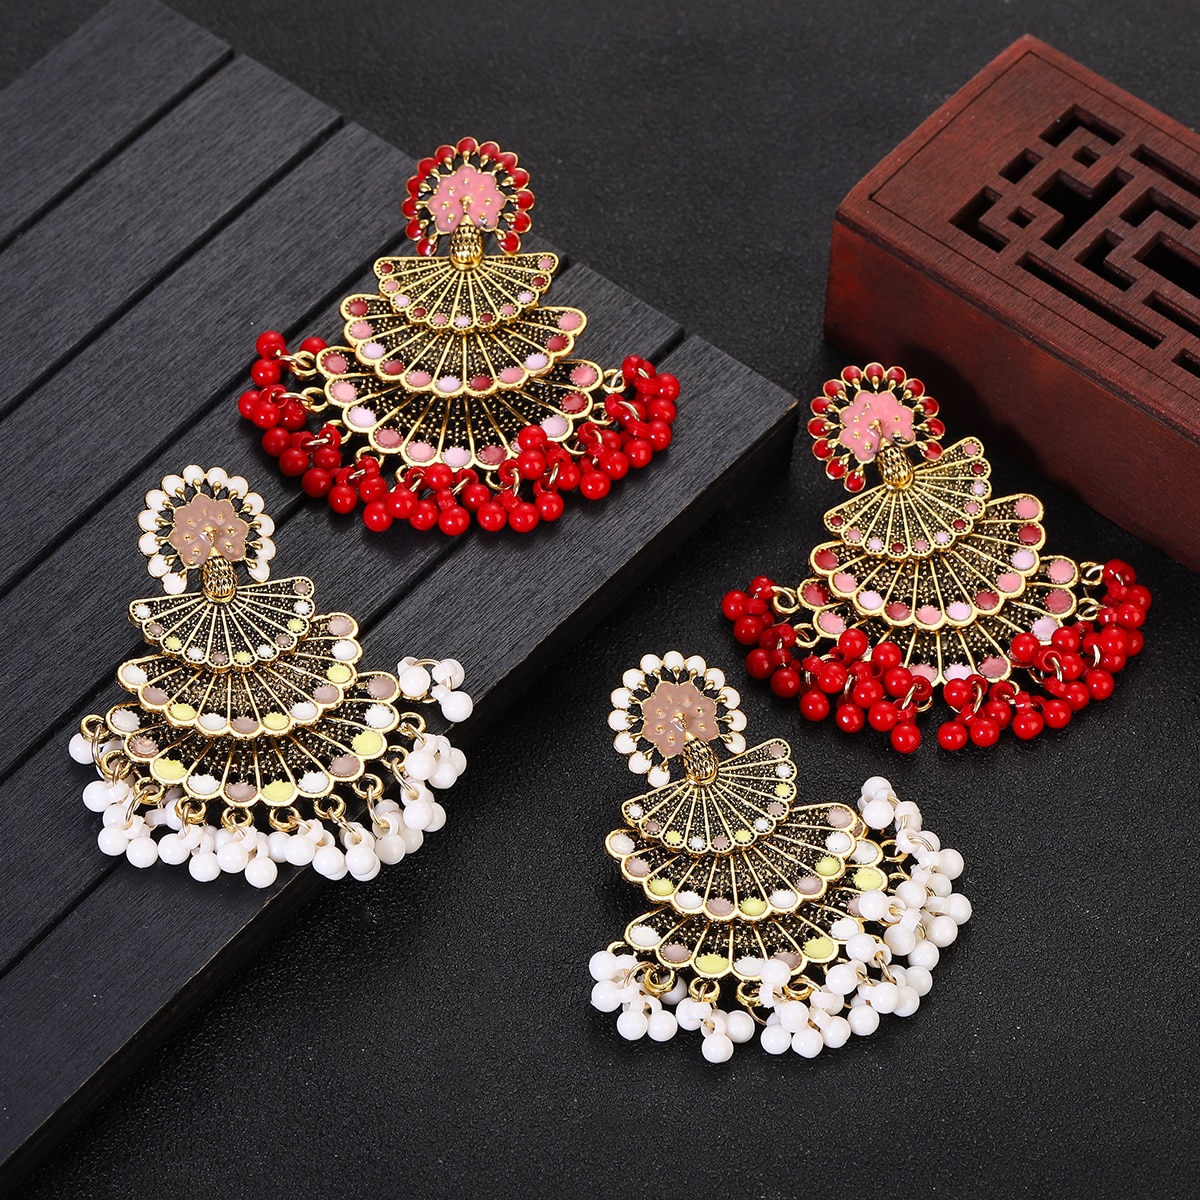 Indian-Jewellery-Red-White-Sector-Jhumka-Earrings-For-Women-Orecchini-Retro-Pearl-Beads-Tassel-Earri-1005004587102350-2